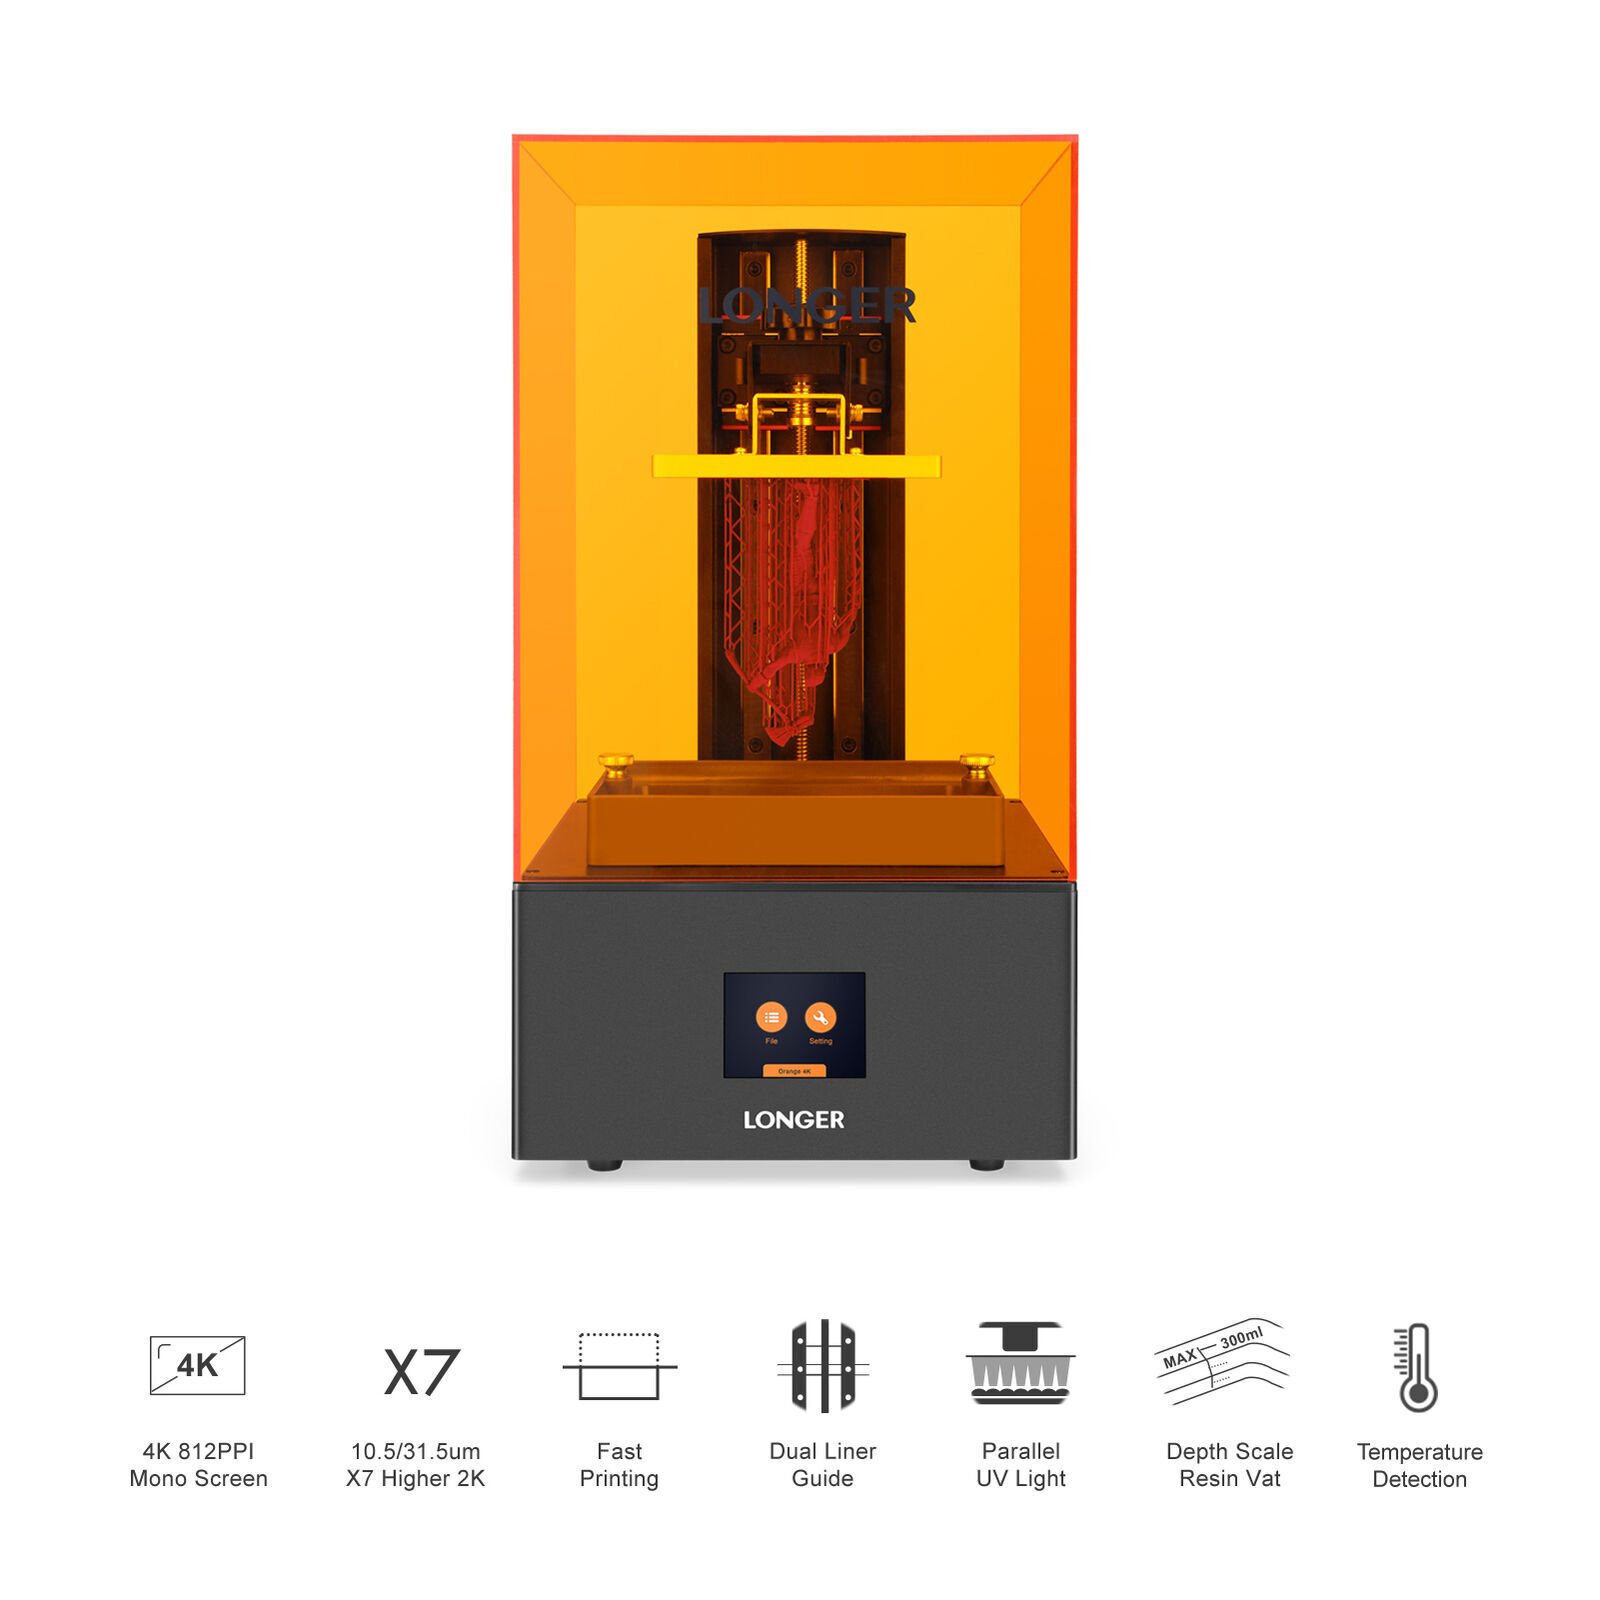 LONGER Orange 4K Mono Ultrafine LCD Resin 3D Printer Dual Liner Guide Printing